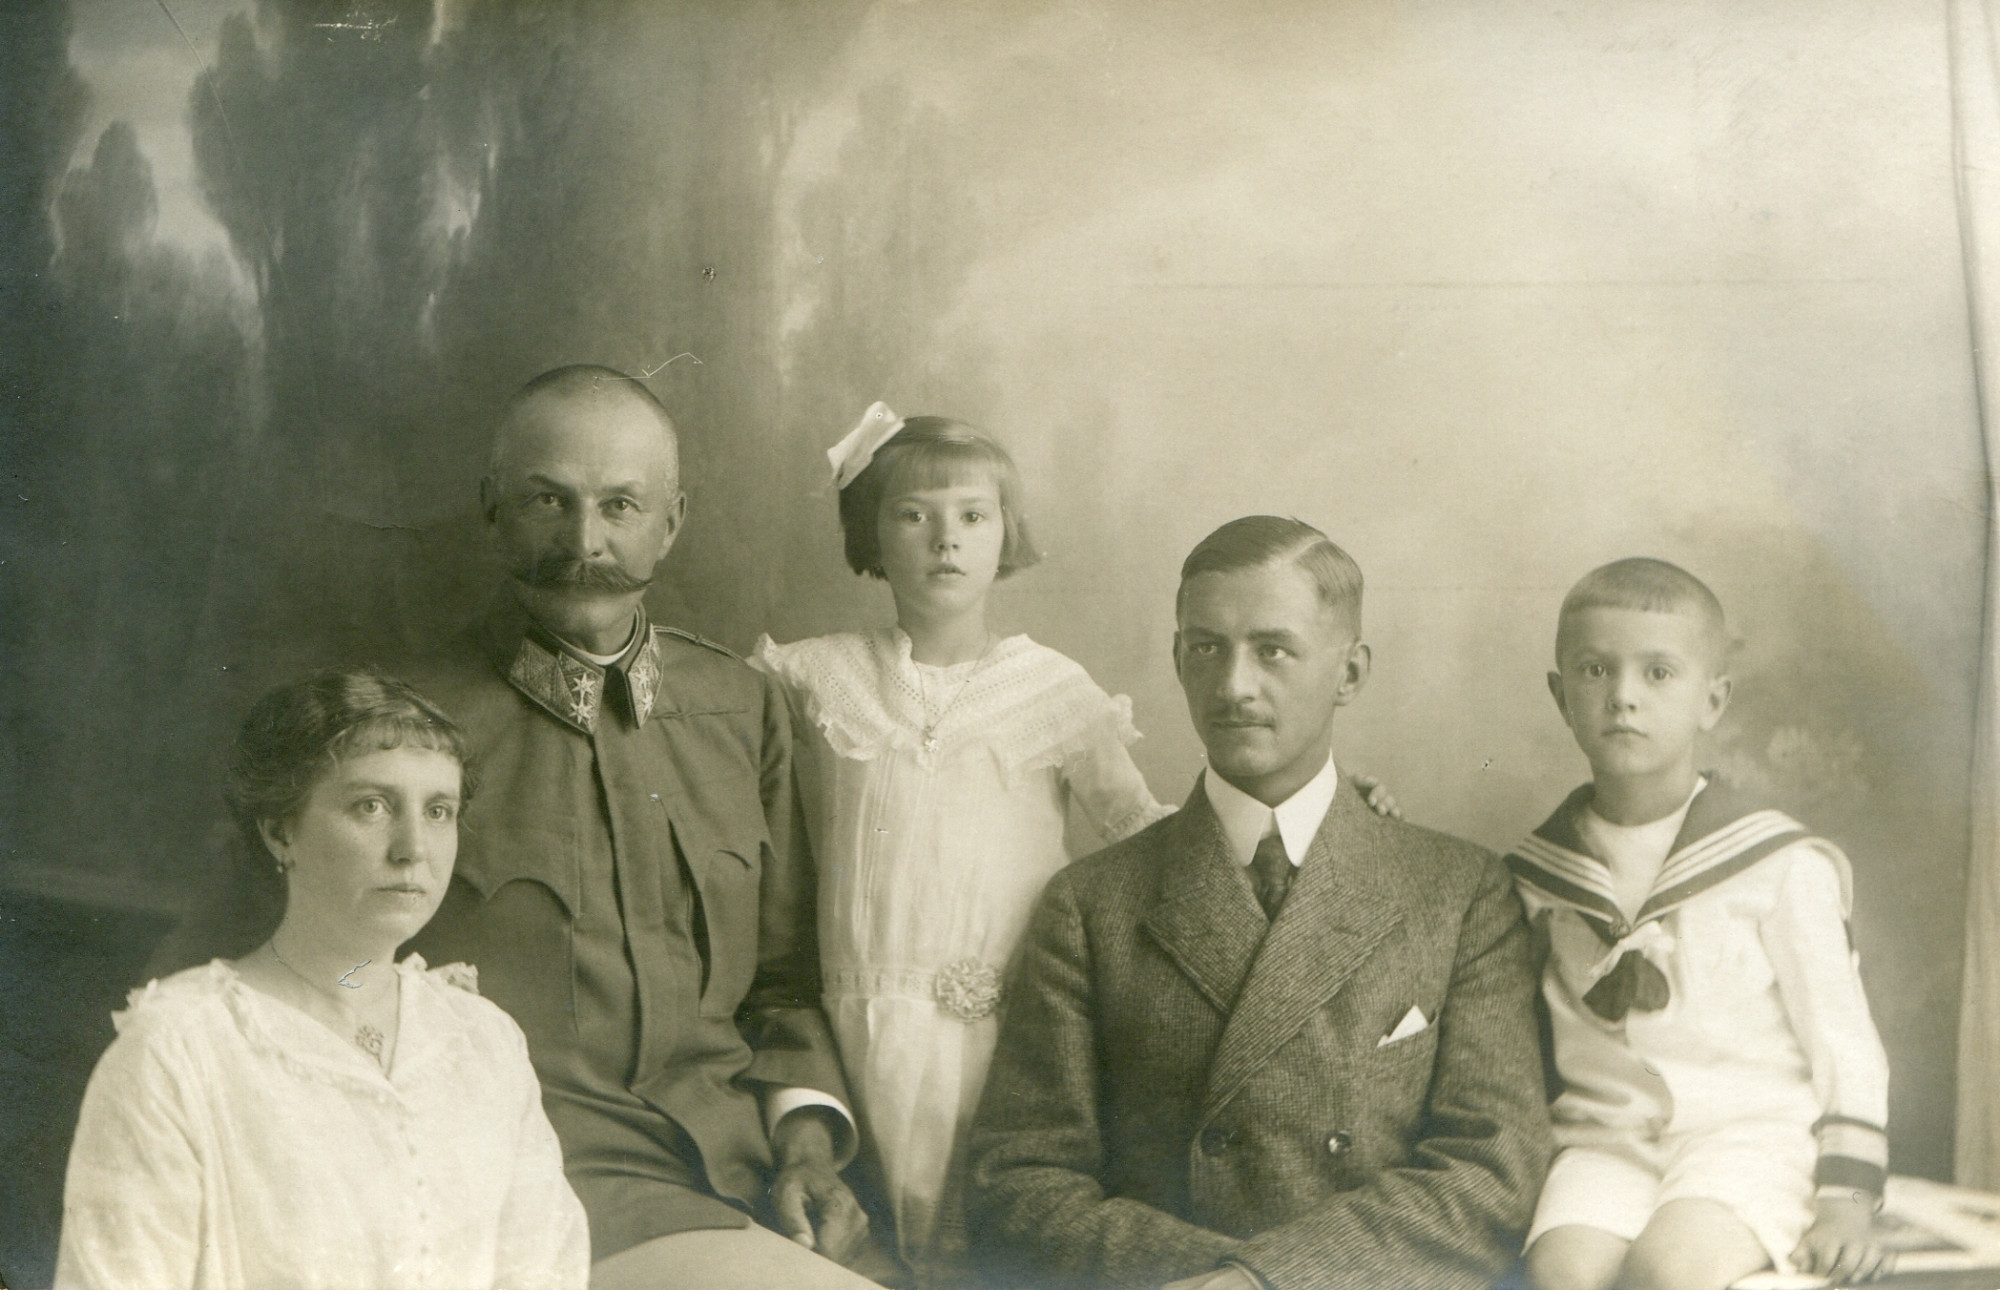 Daur Olga,Scholtz Gusztáv,Scholtz Mária,dr.Merényi Scholtz Gusztáv,Scholtz György